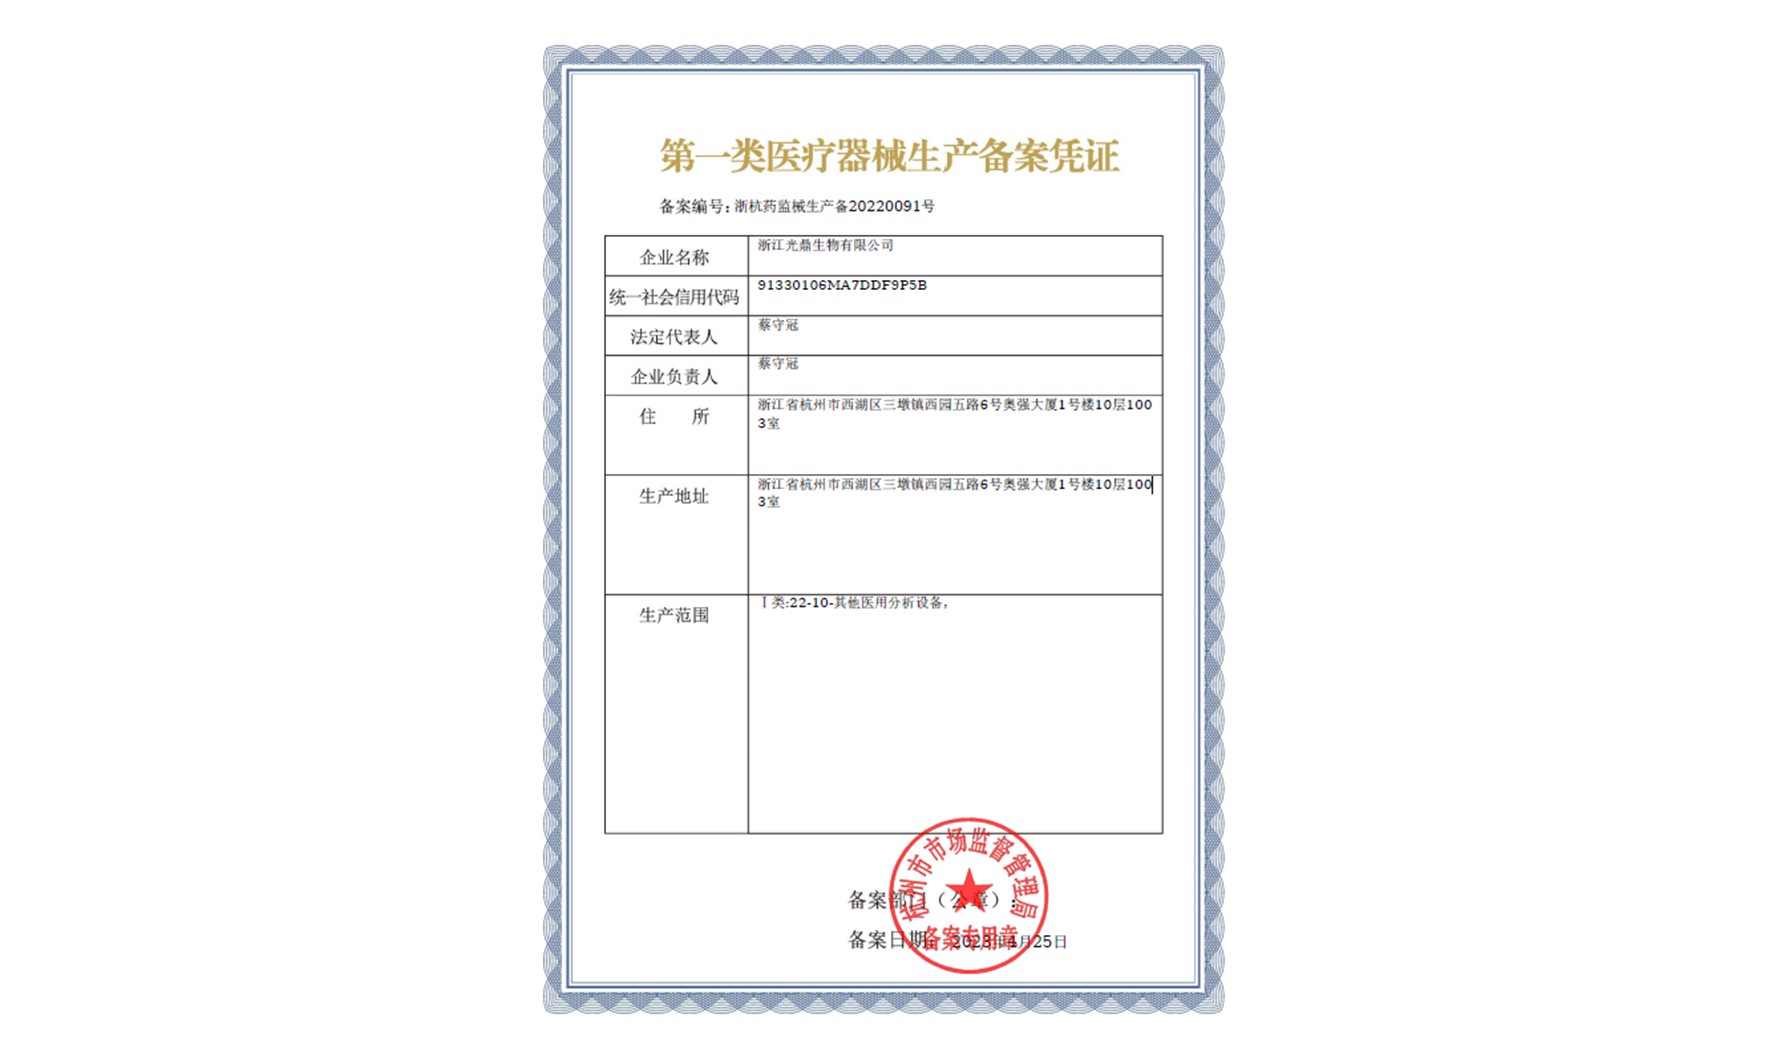 Zhejiang BiOptic has received Class I medical device certification